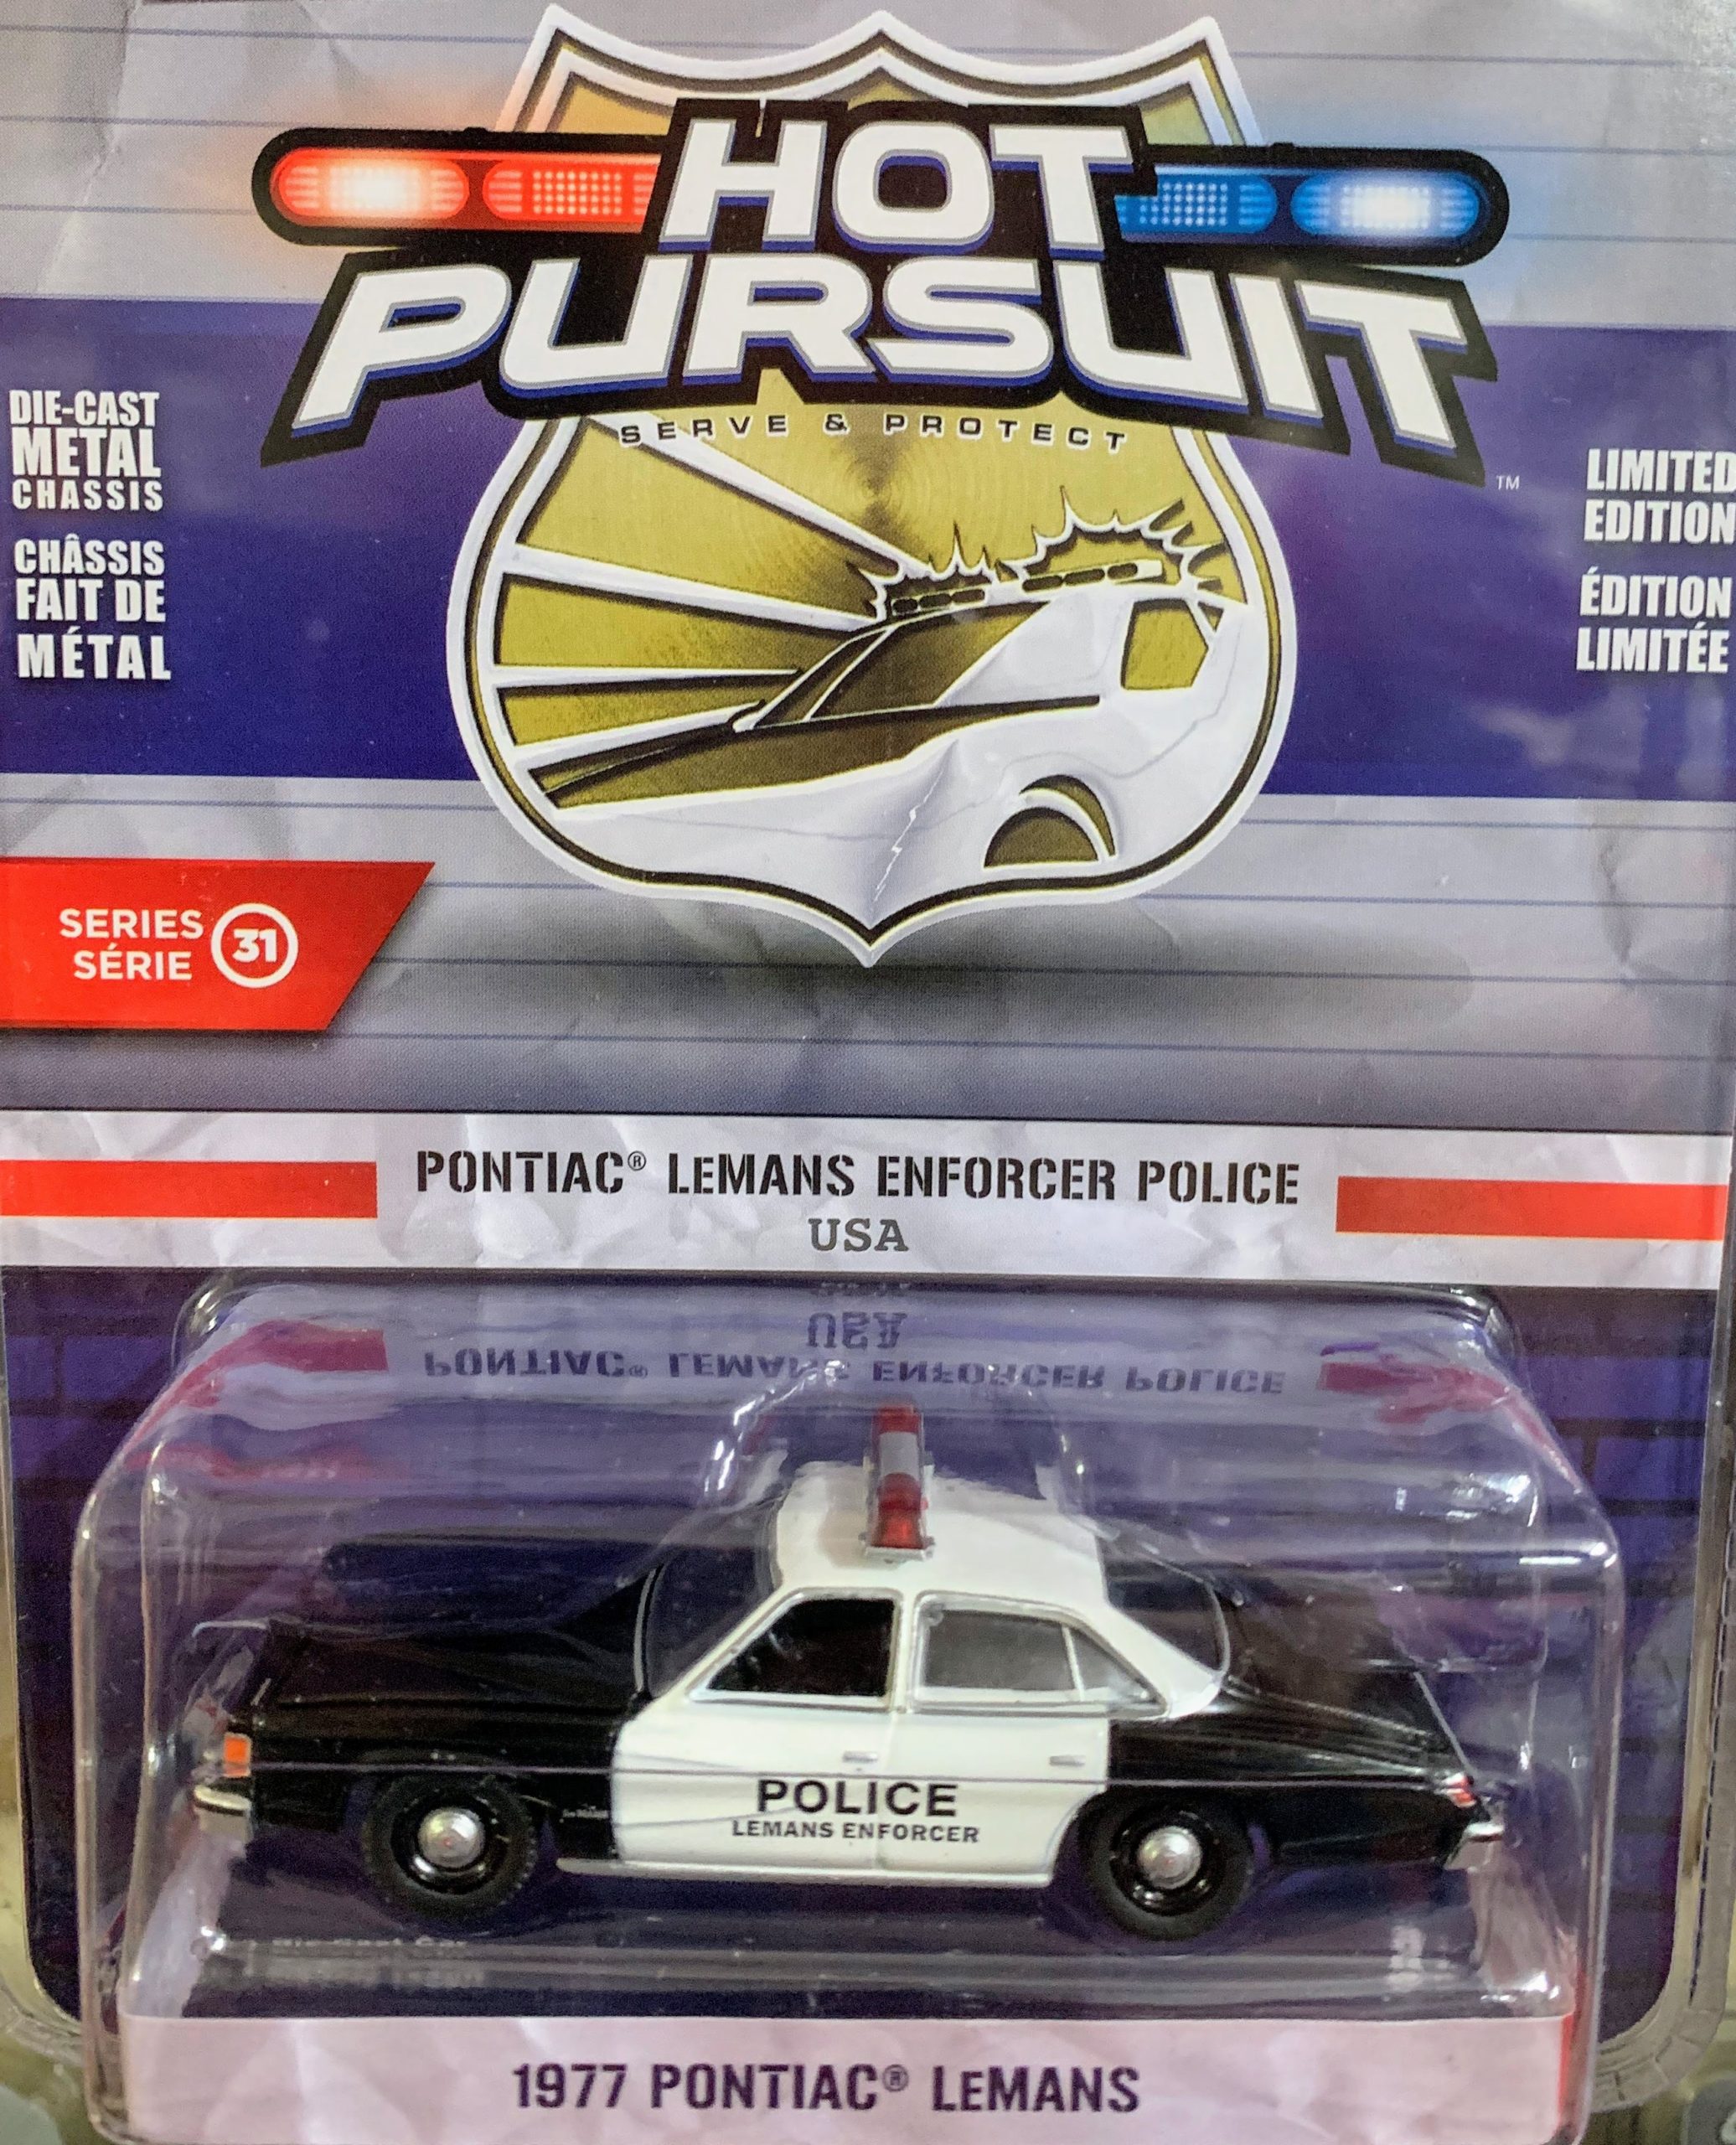 Pontiac Lemans , 1977 Enforcer Police U.S.A.